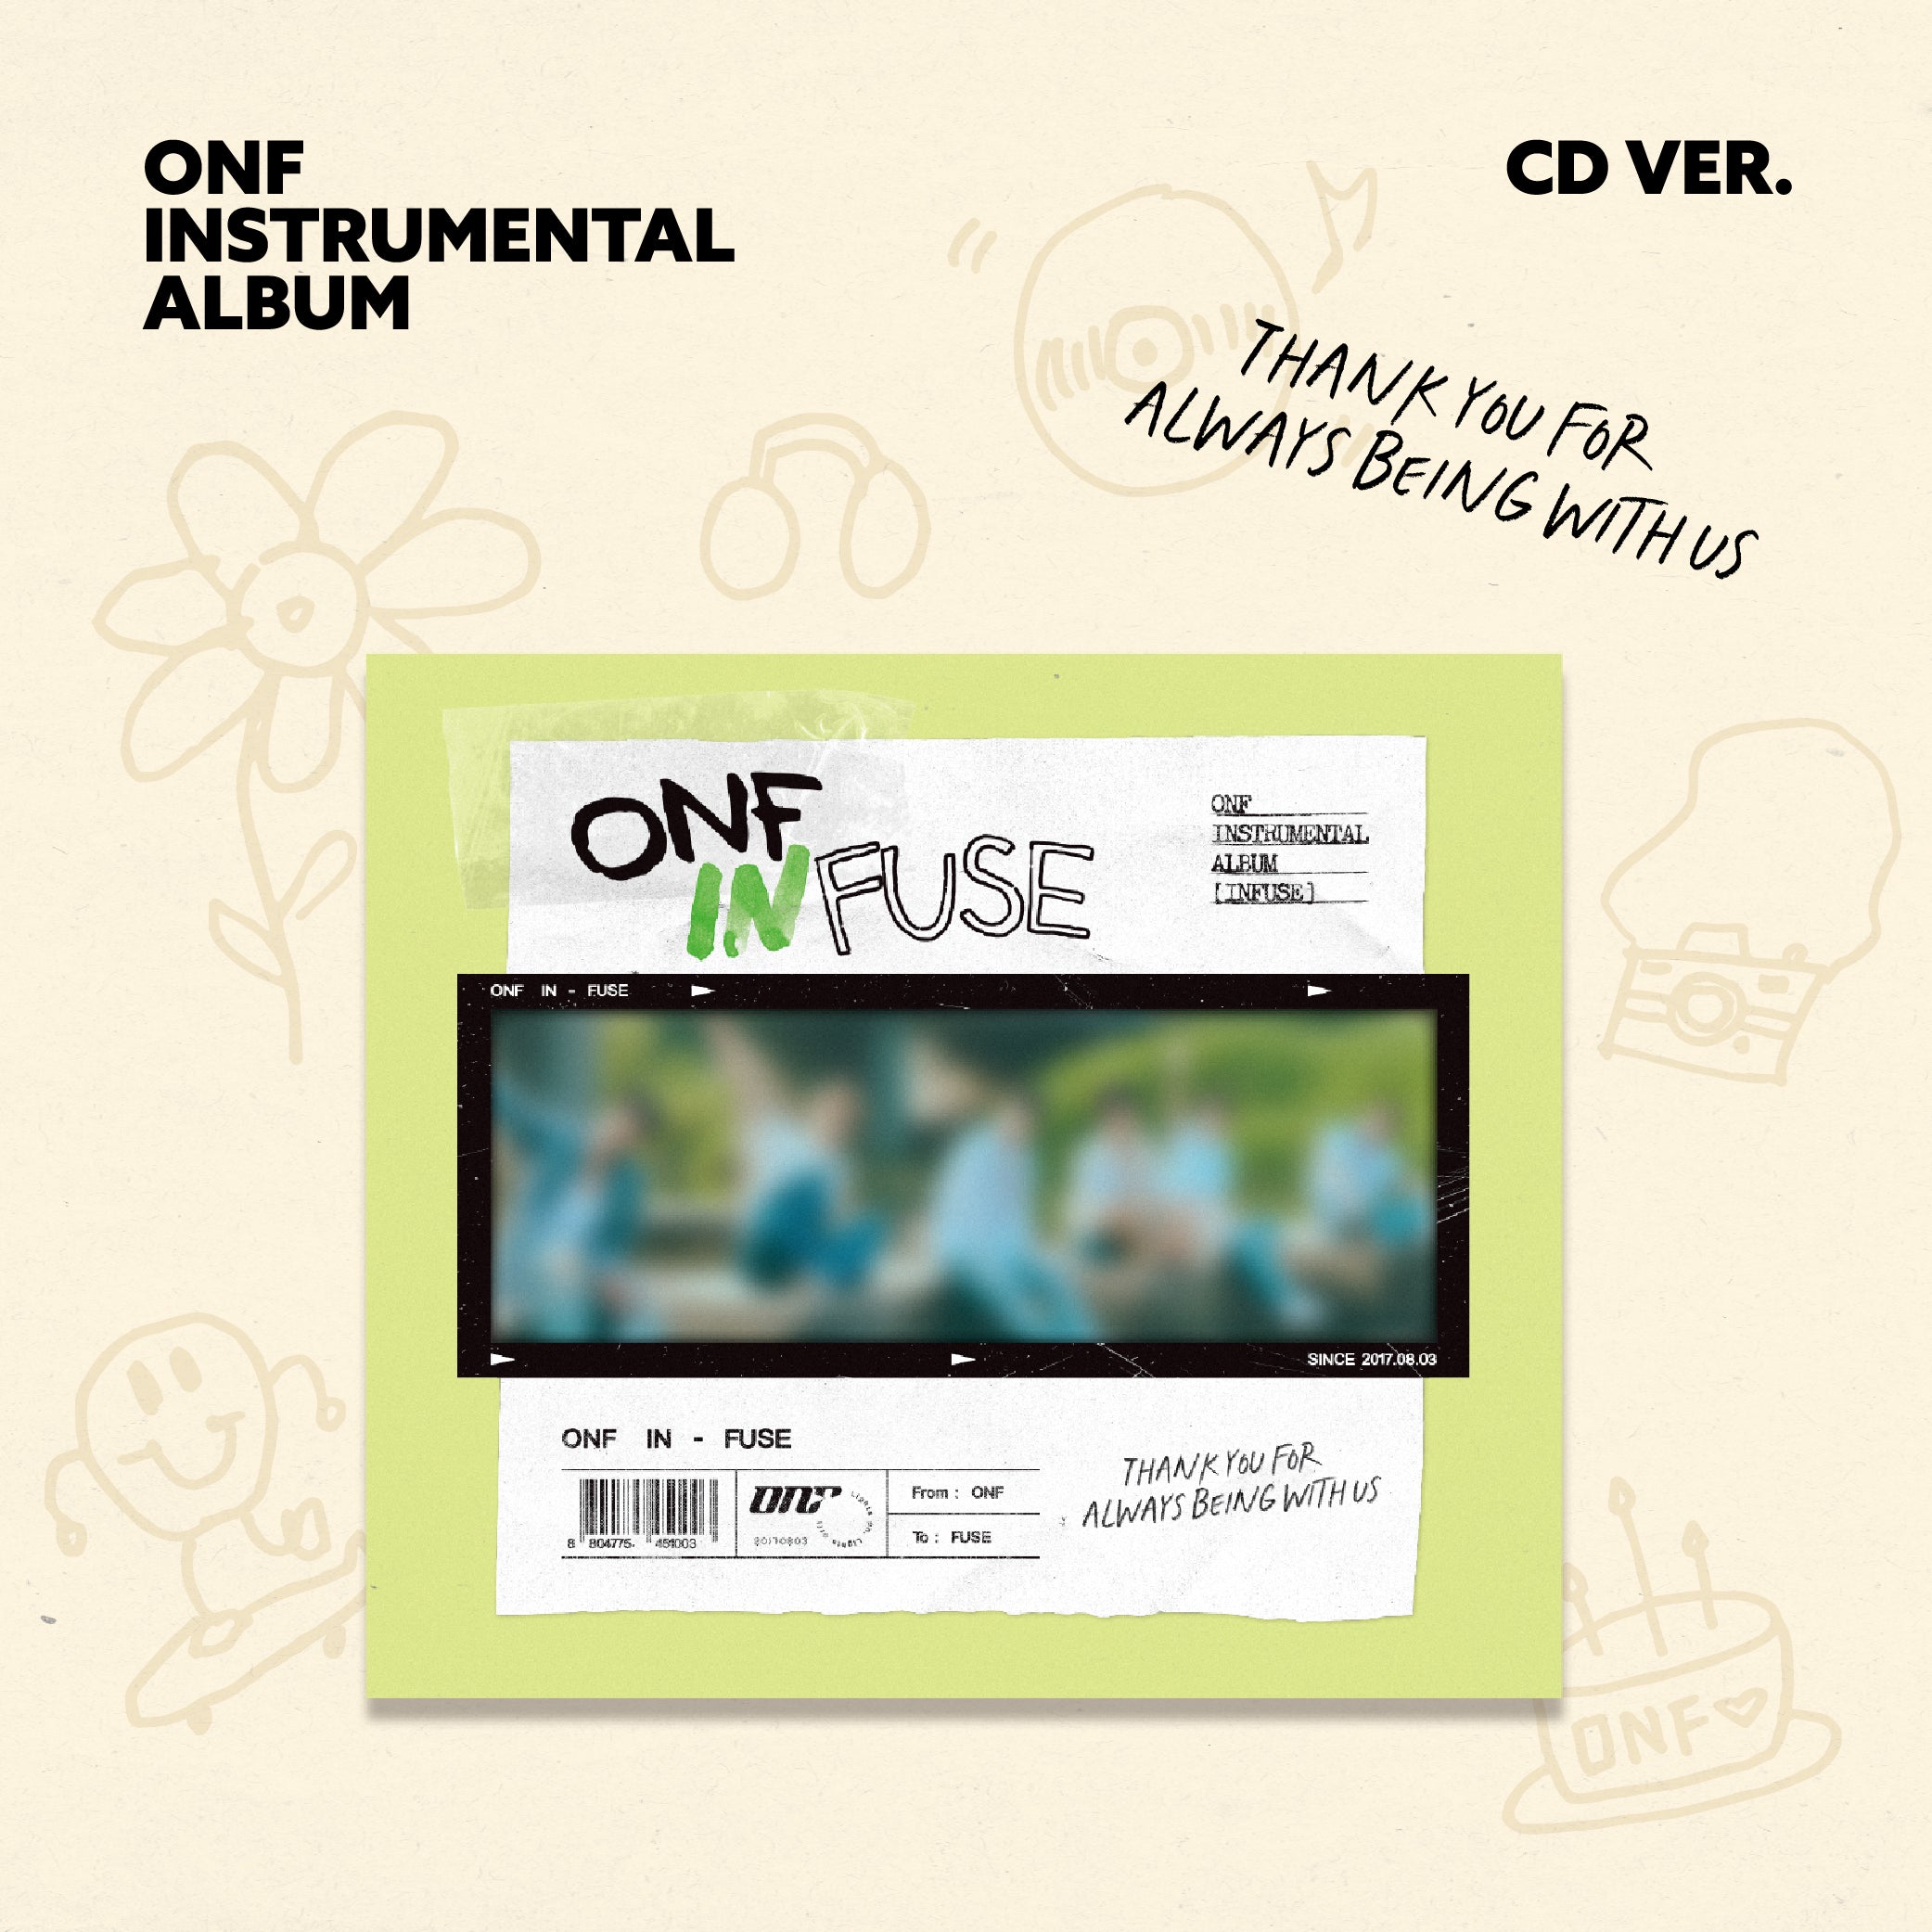 ONF - INSTRUMENTAL ALBUM [INFUSE] CD Ver.